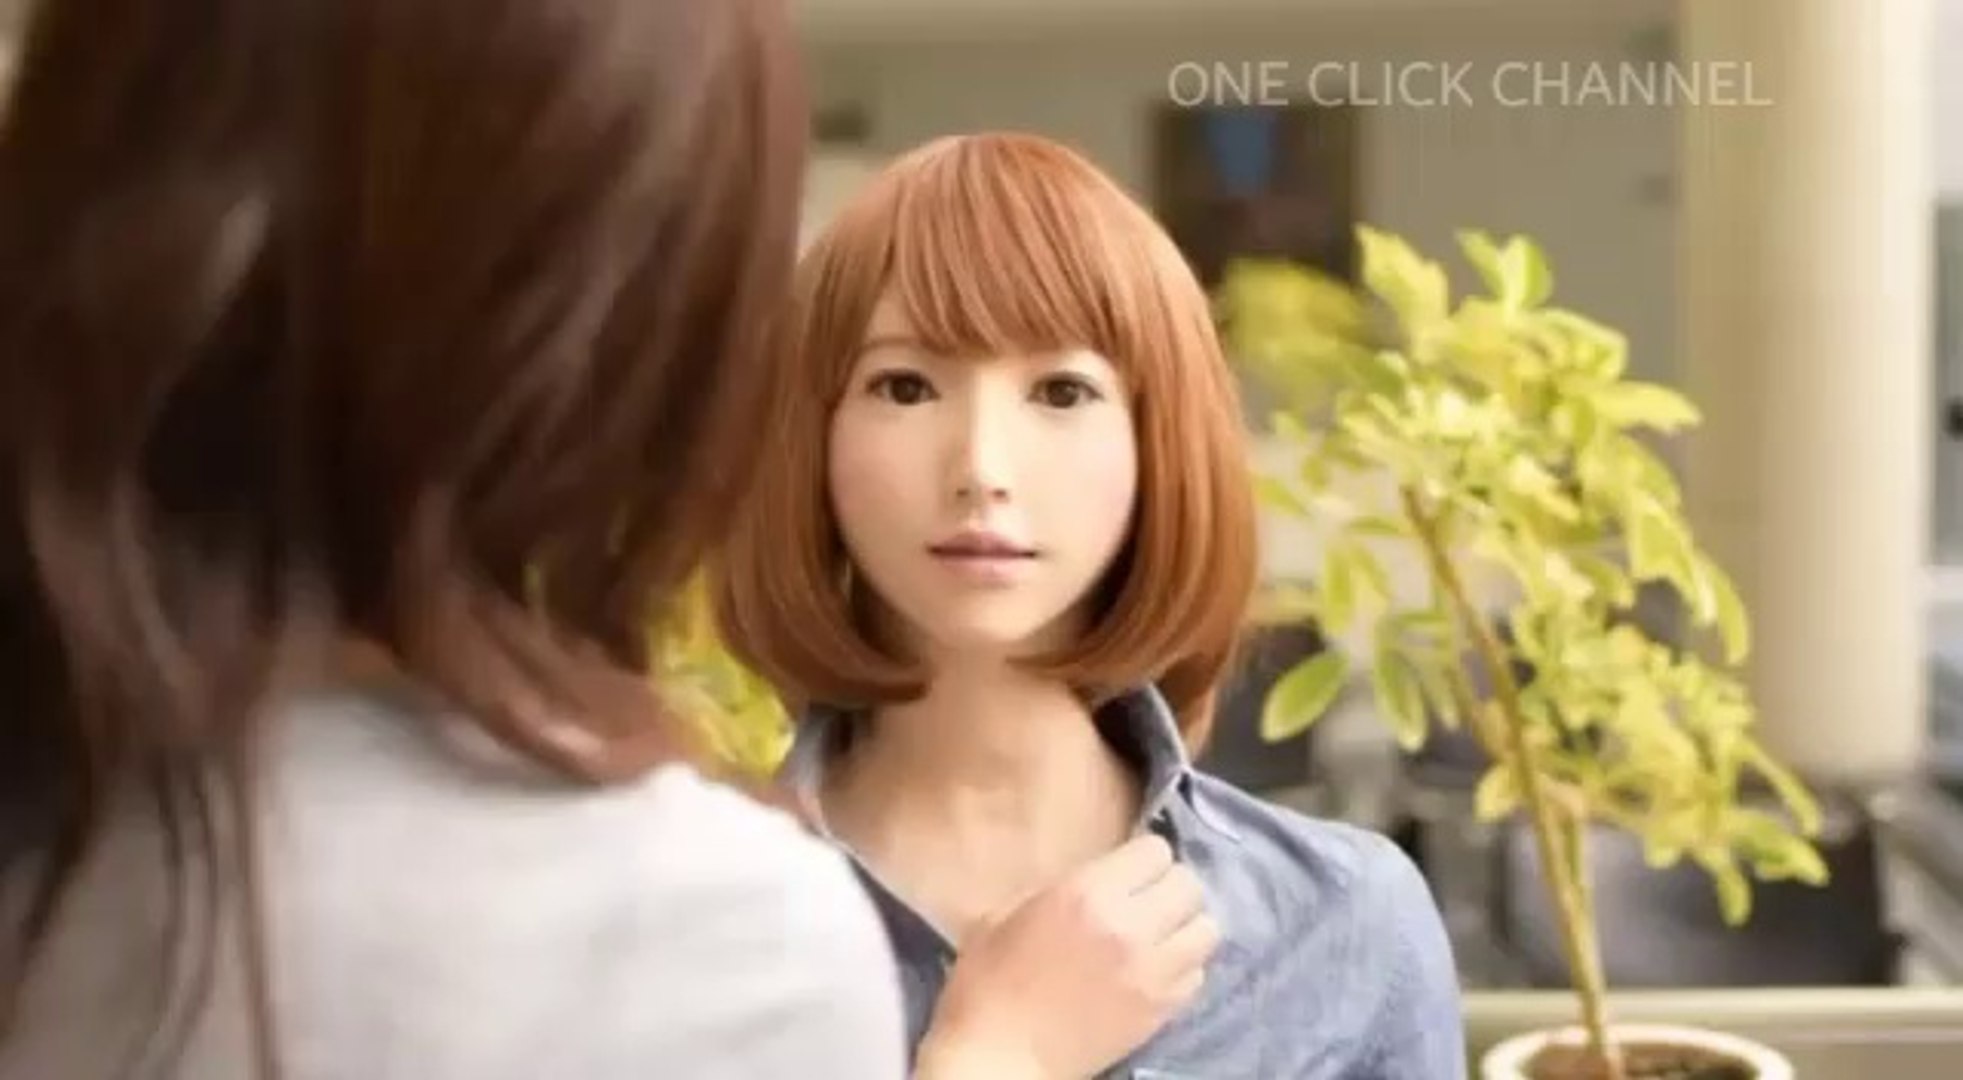 Meet Erica - The Most Life-like Humanoid Robot